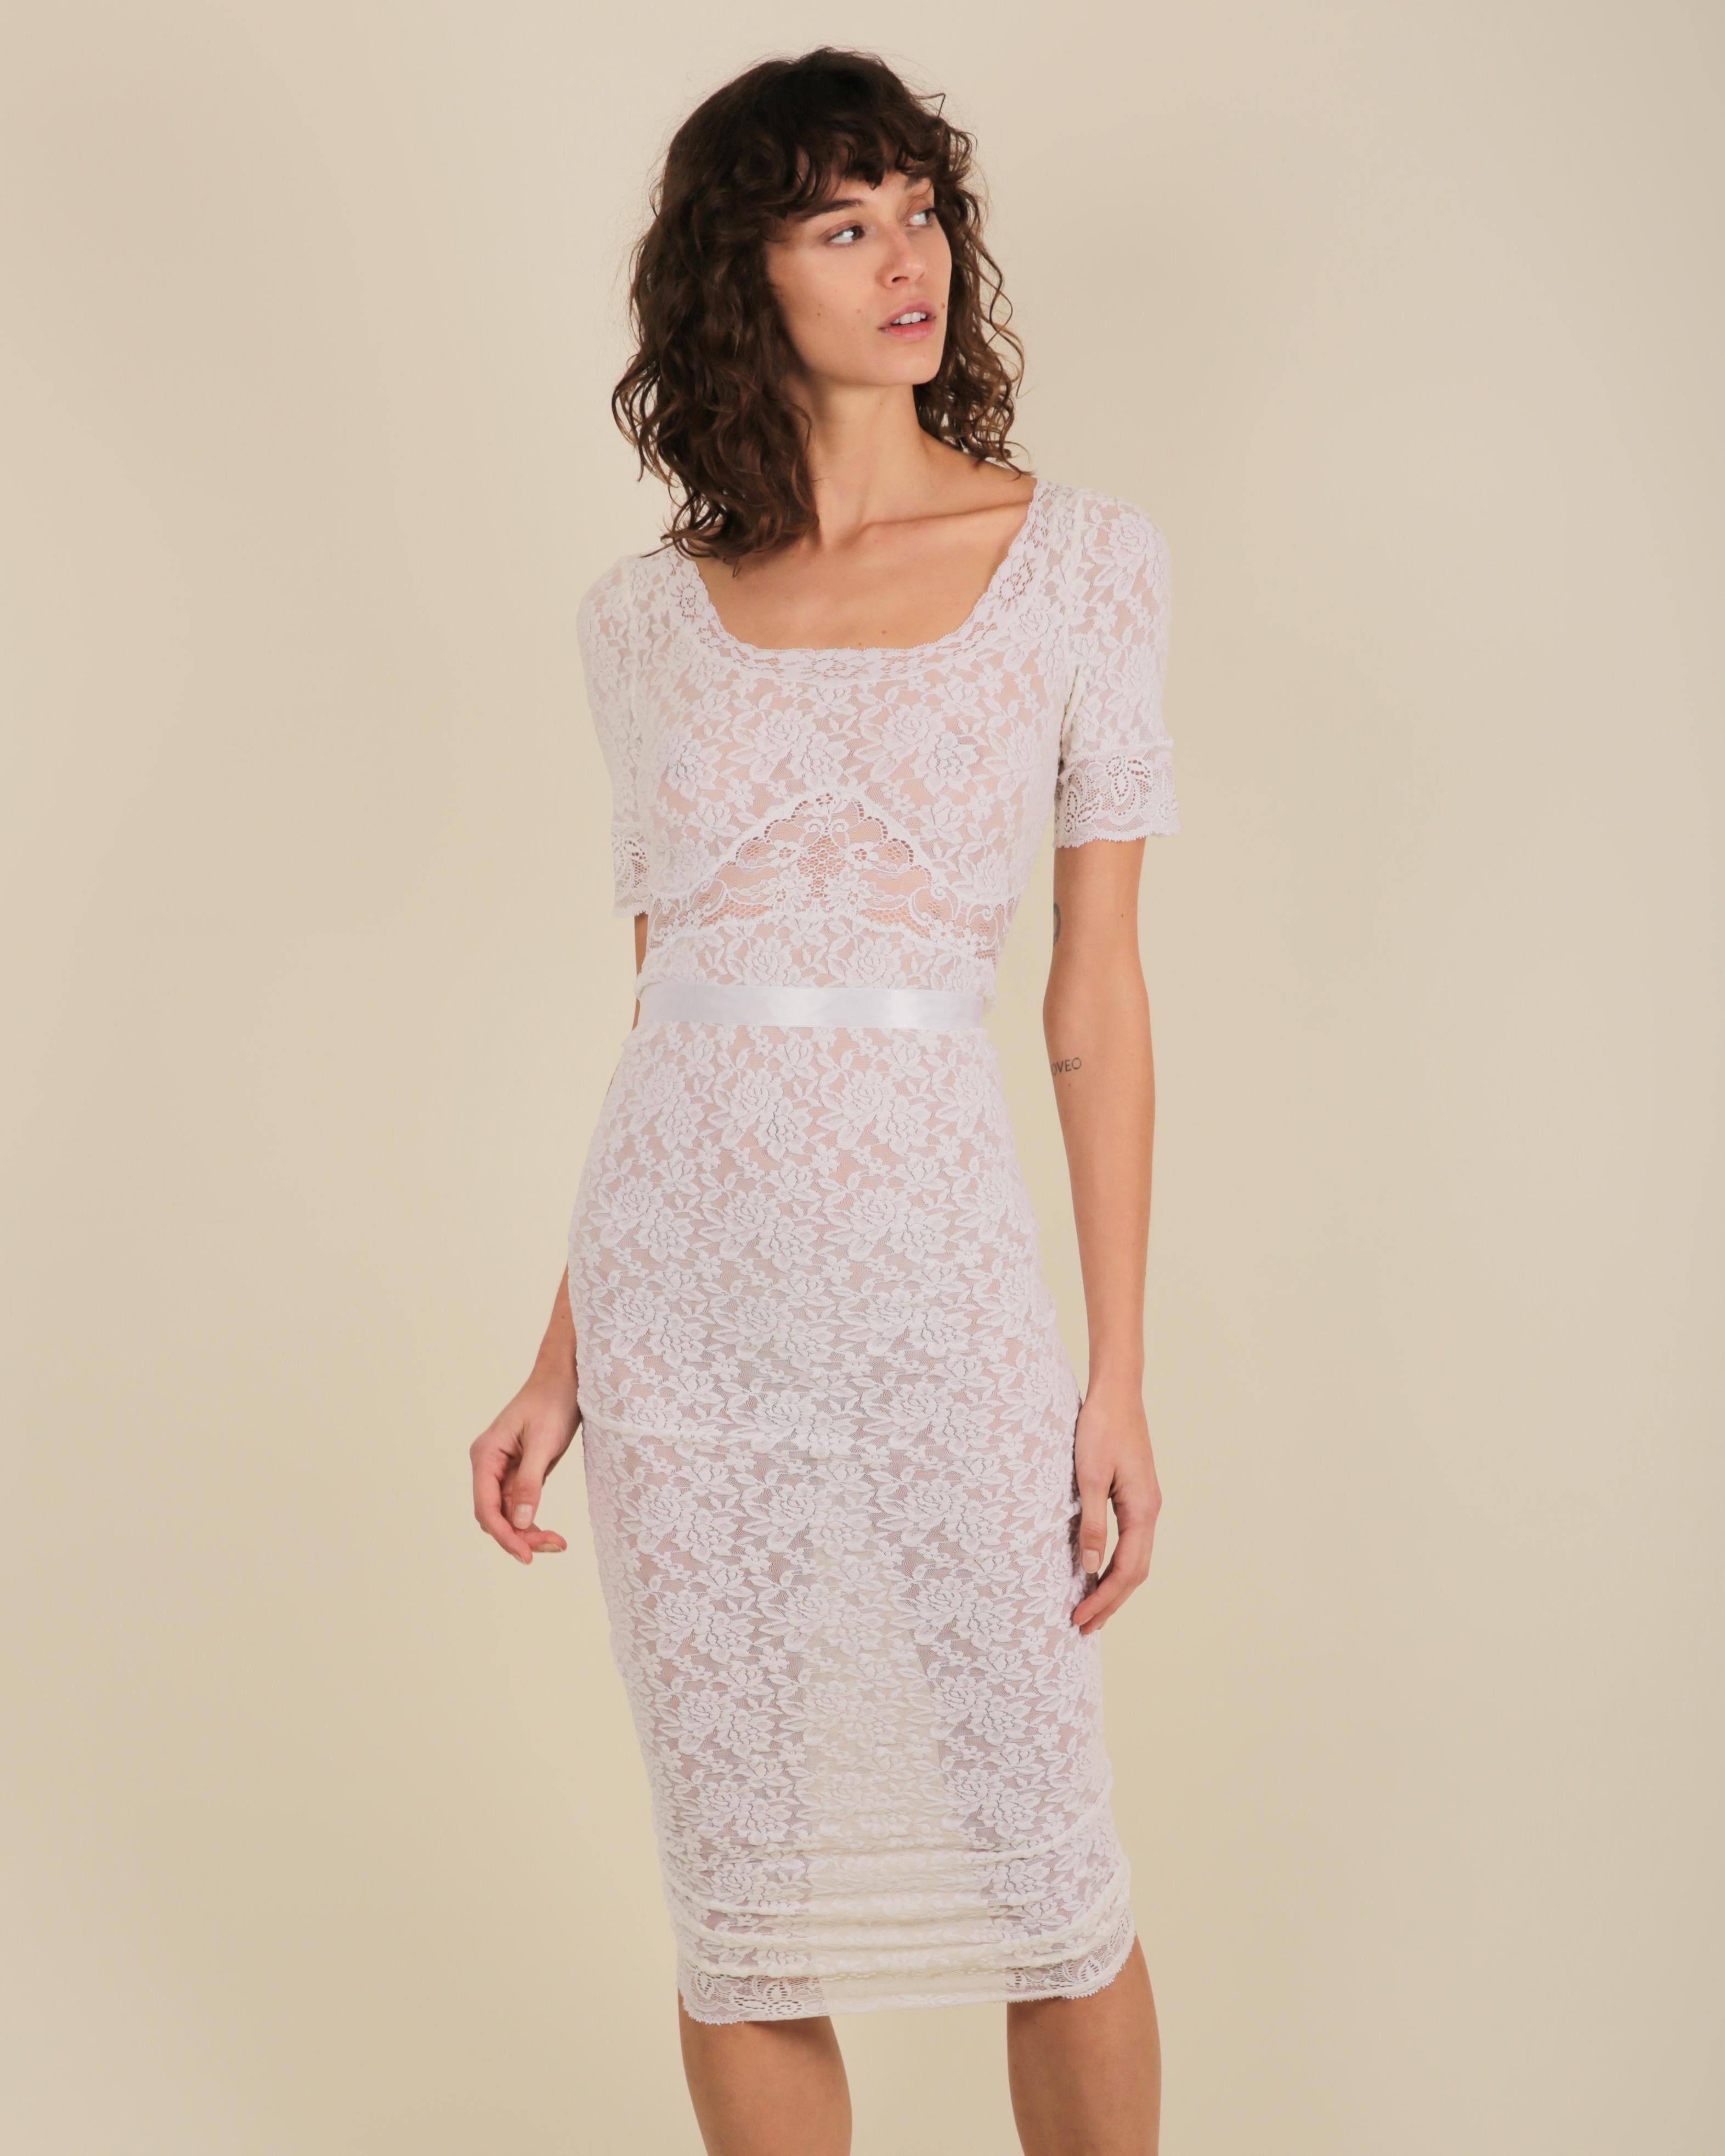 Women's Dolce & Gabbana D&G S/S 2006 white lace sheer ribbon body con dress For Sale